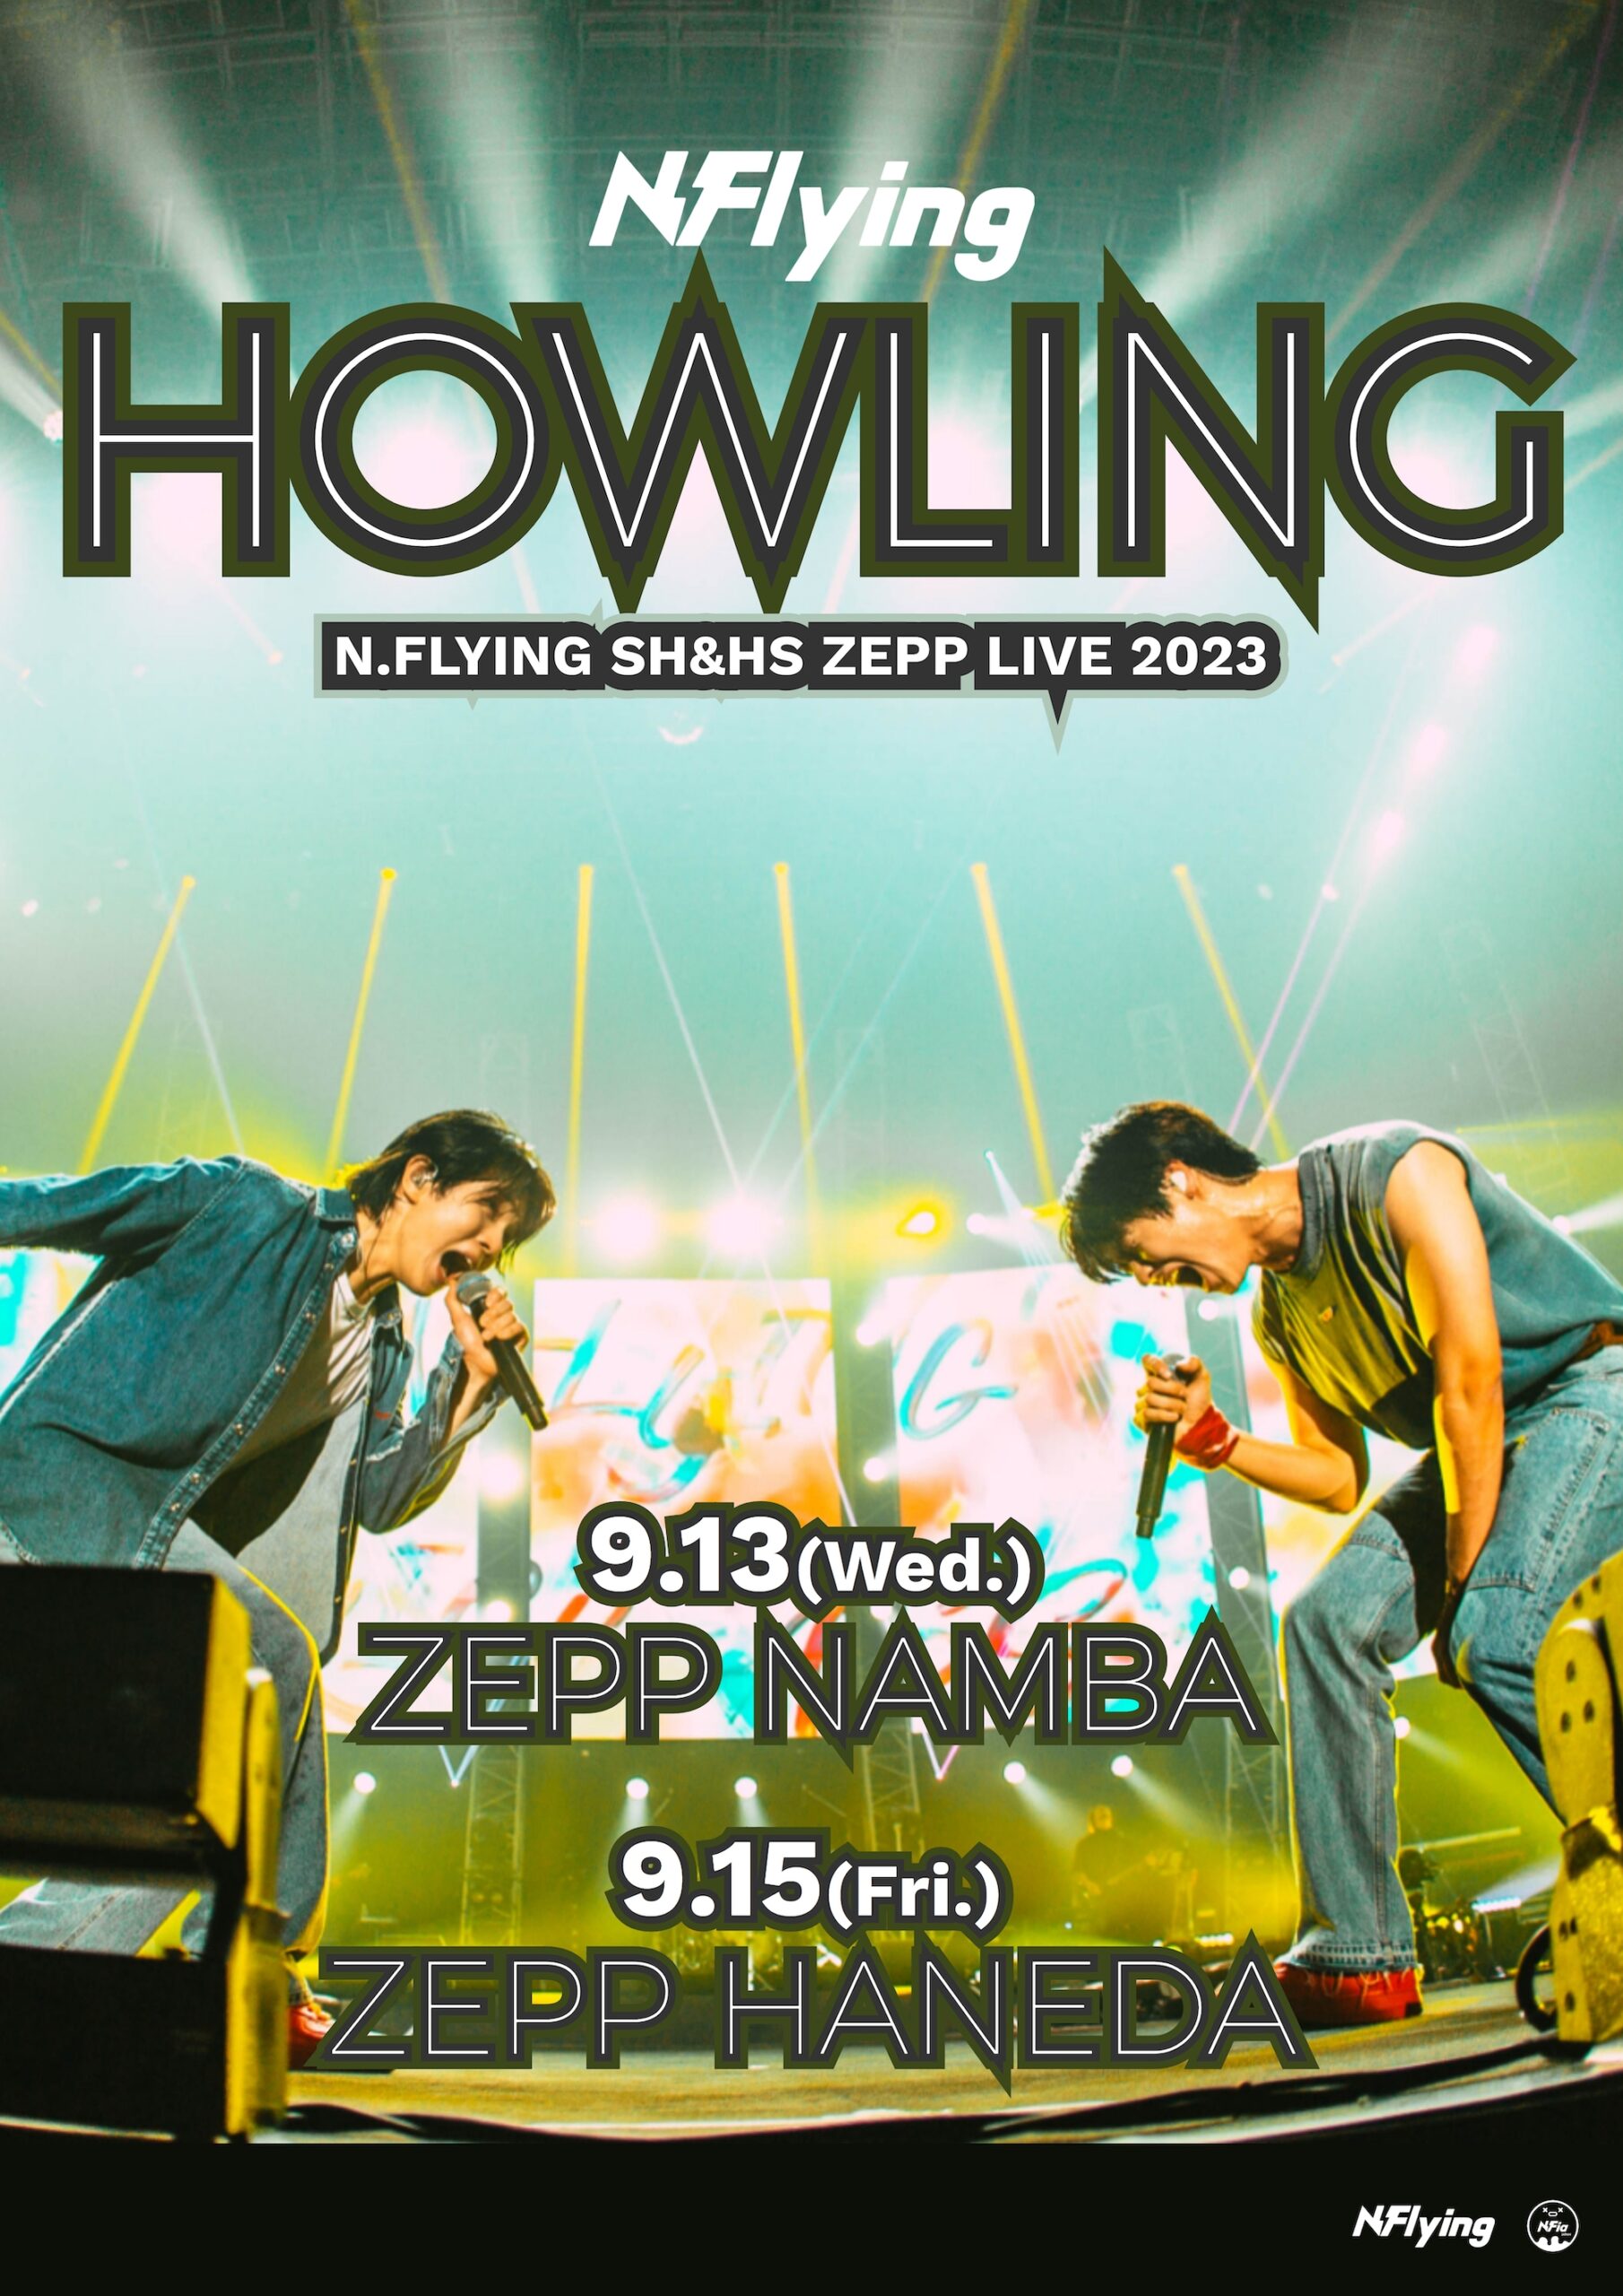 N.Flying SH&HS ZEPP LIVE 2023 “HOWLING”＜東京＞